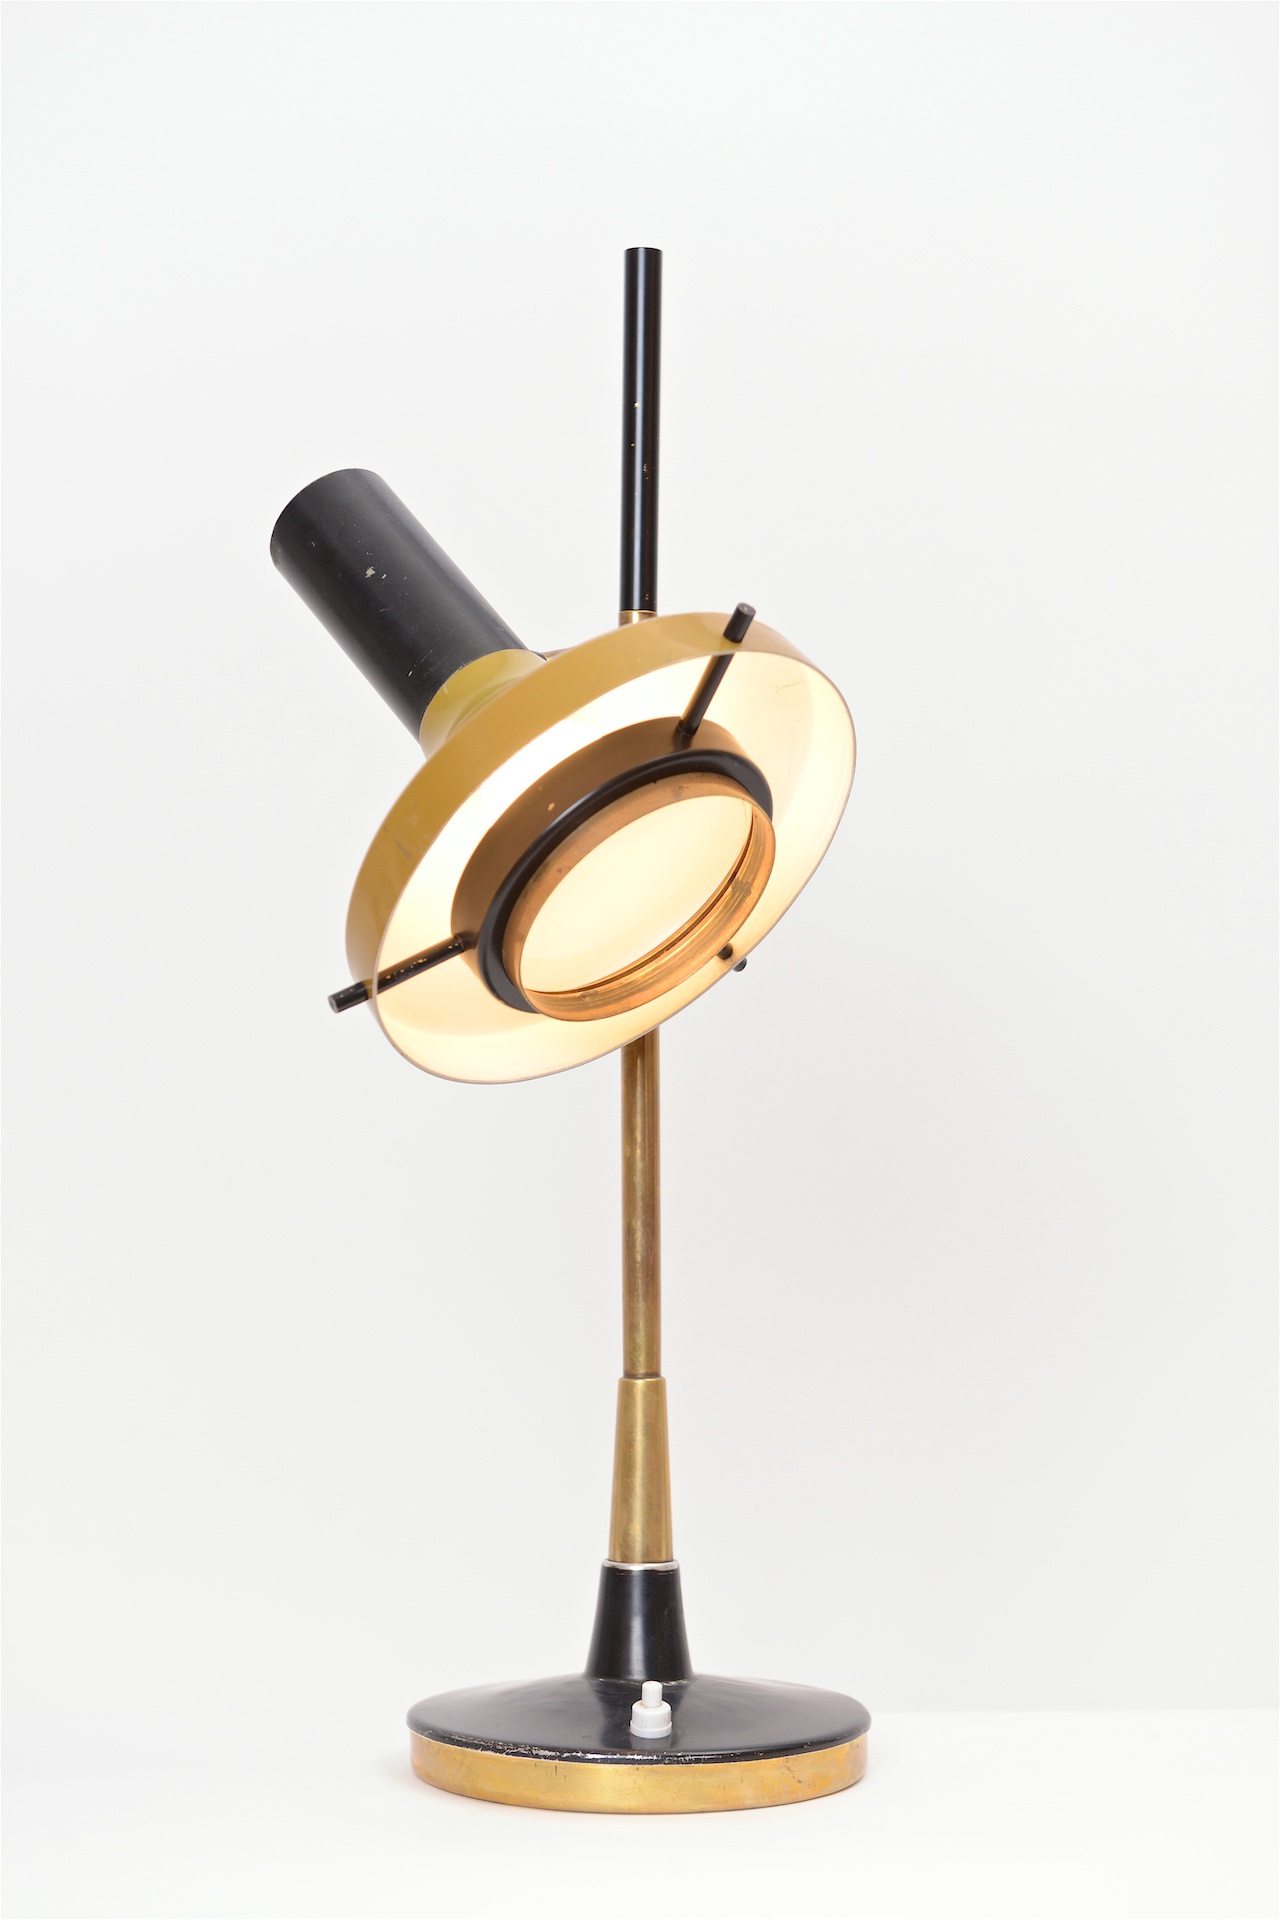 Adjustable '533' Brass Table Light by Oscar Torlasco